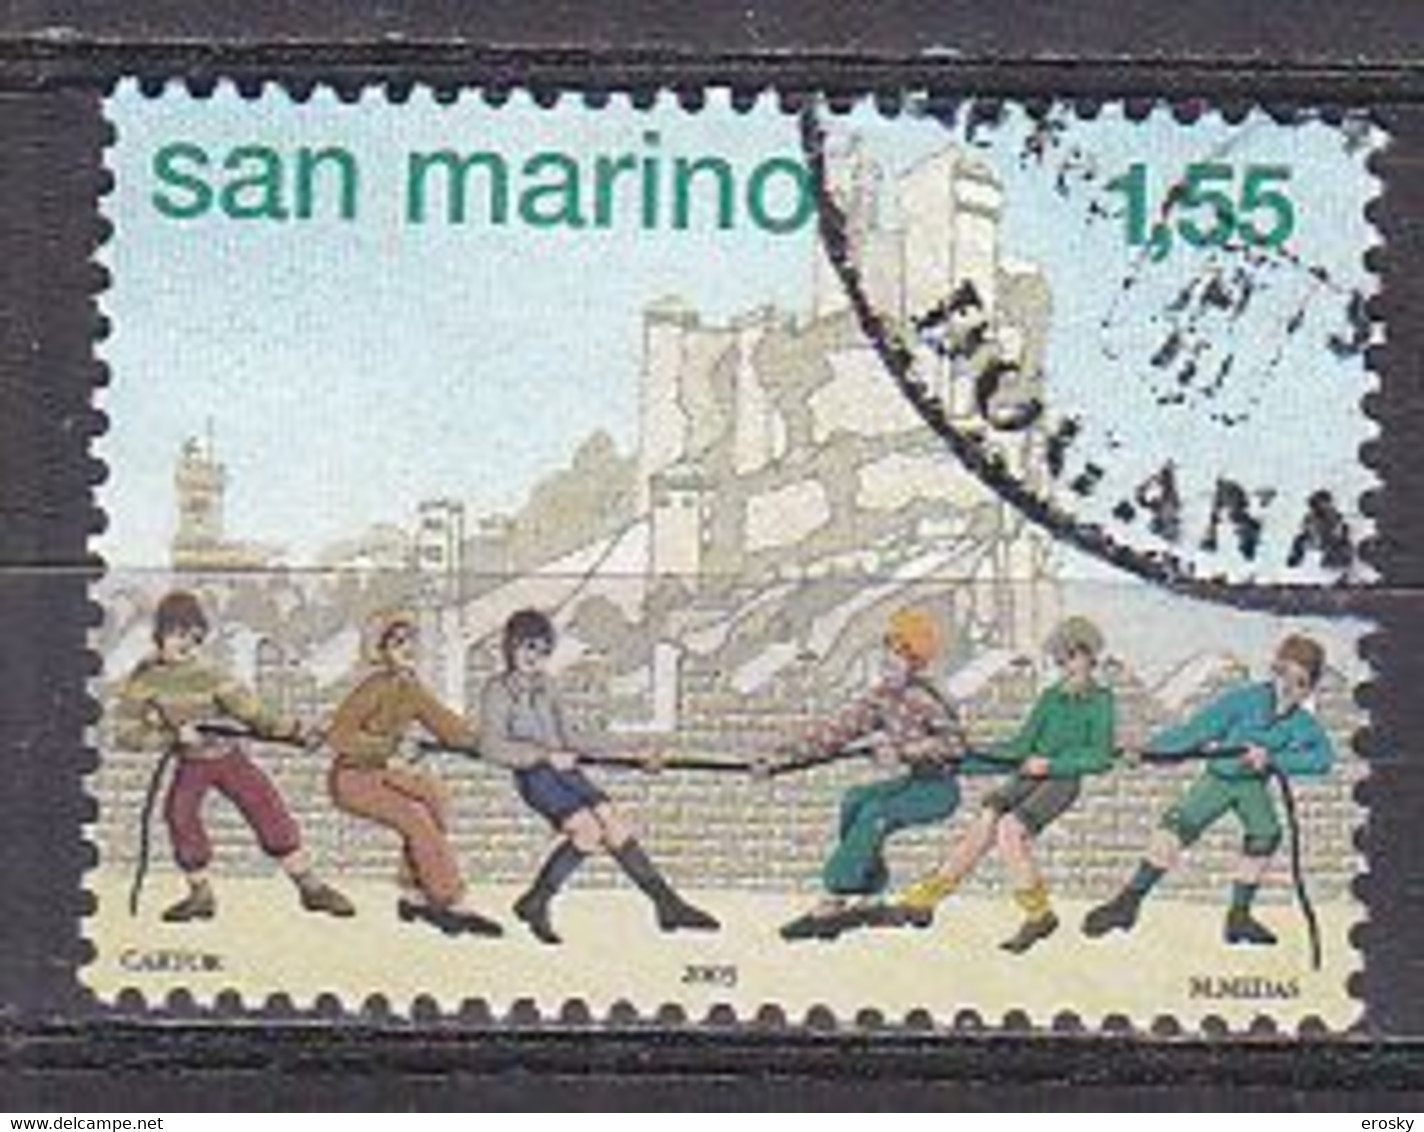 Y9006 - SAN MARINO Ss N°1953 - SAINT-MARIN Yv N°1911 - Gebruikt